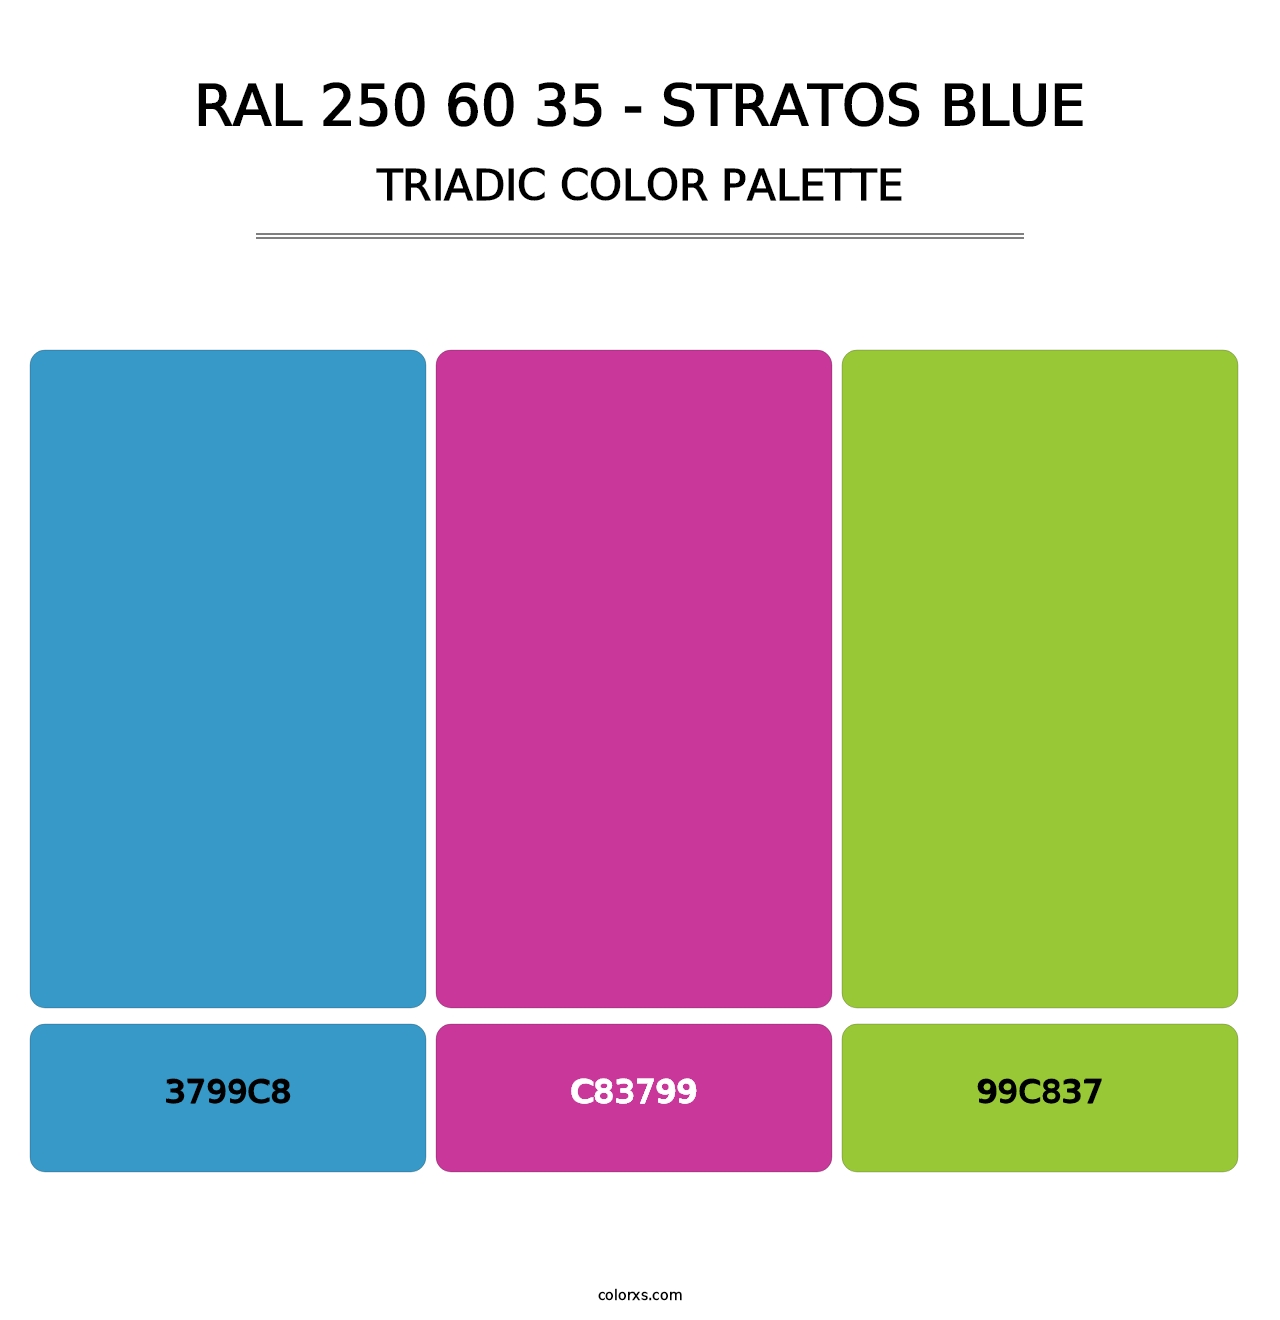 RAL 250 60 35 - Stratos Blue - Triadic Color Palette